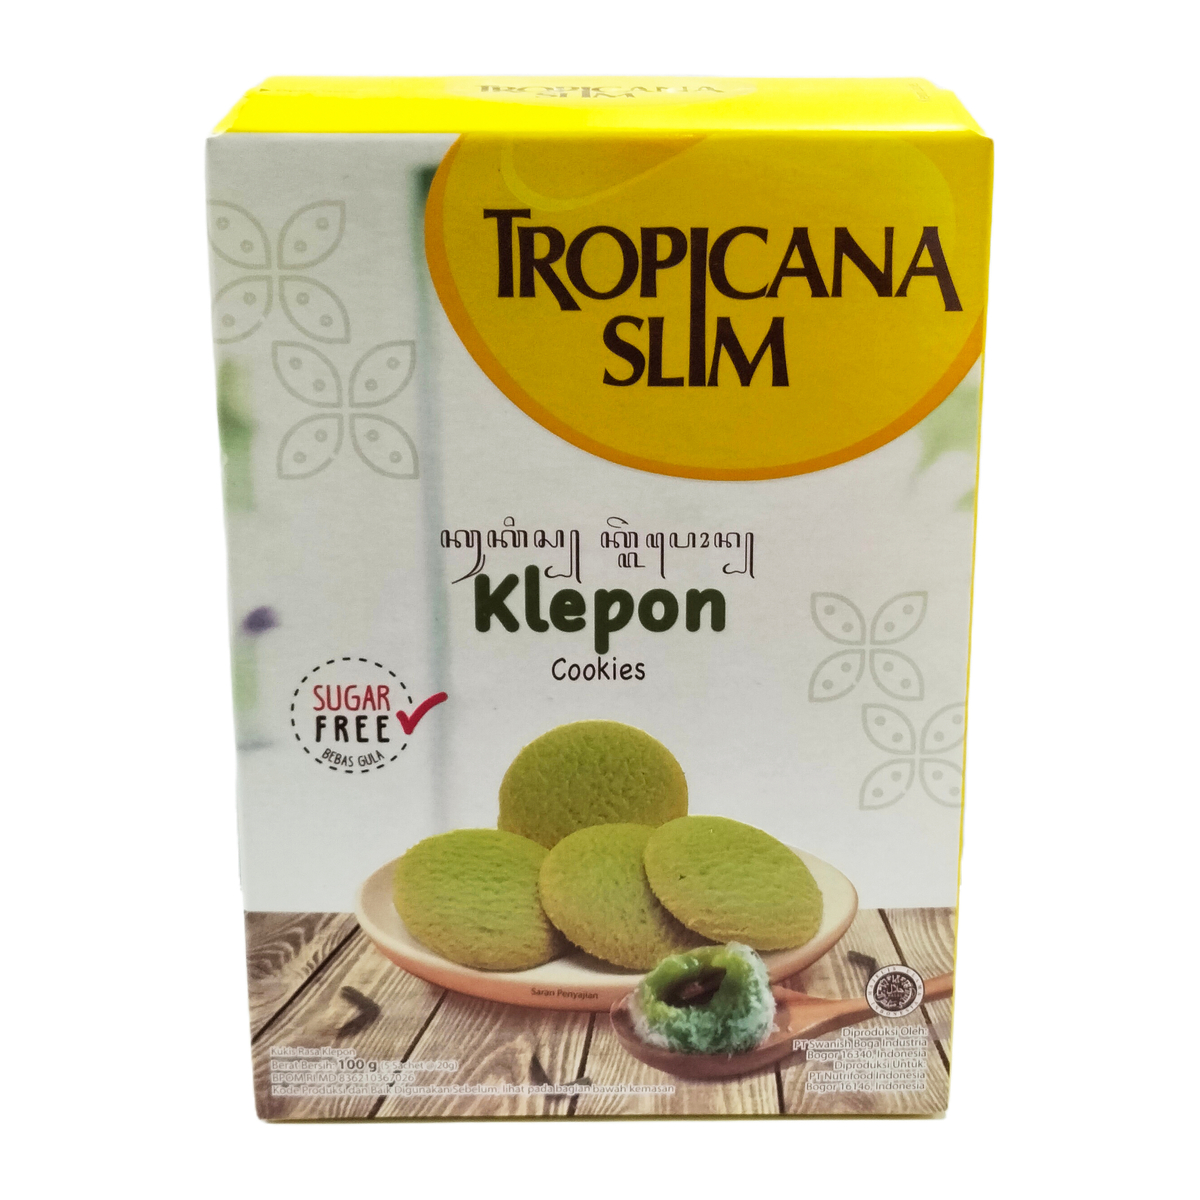 Tropicana Slim Klepon Cookies 100g